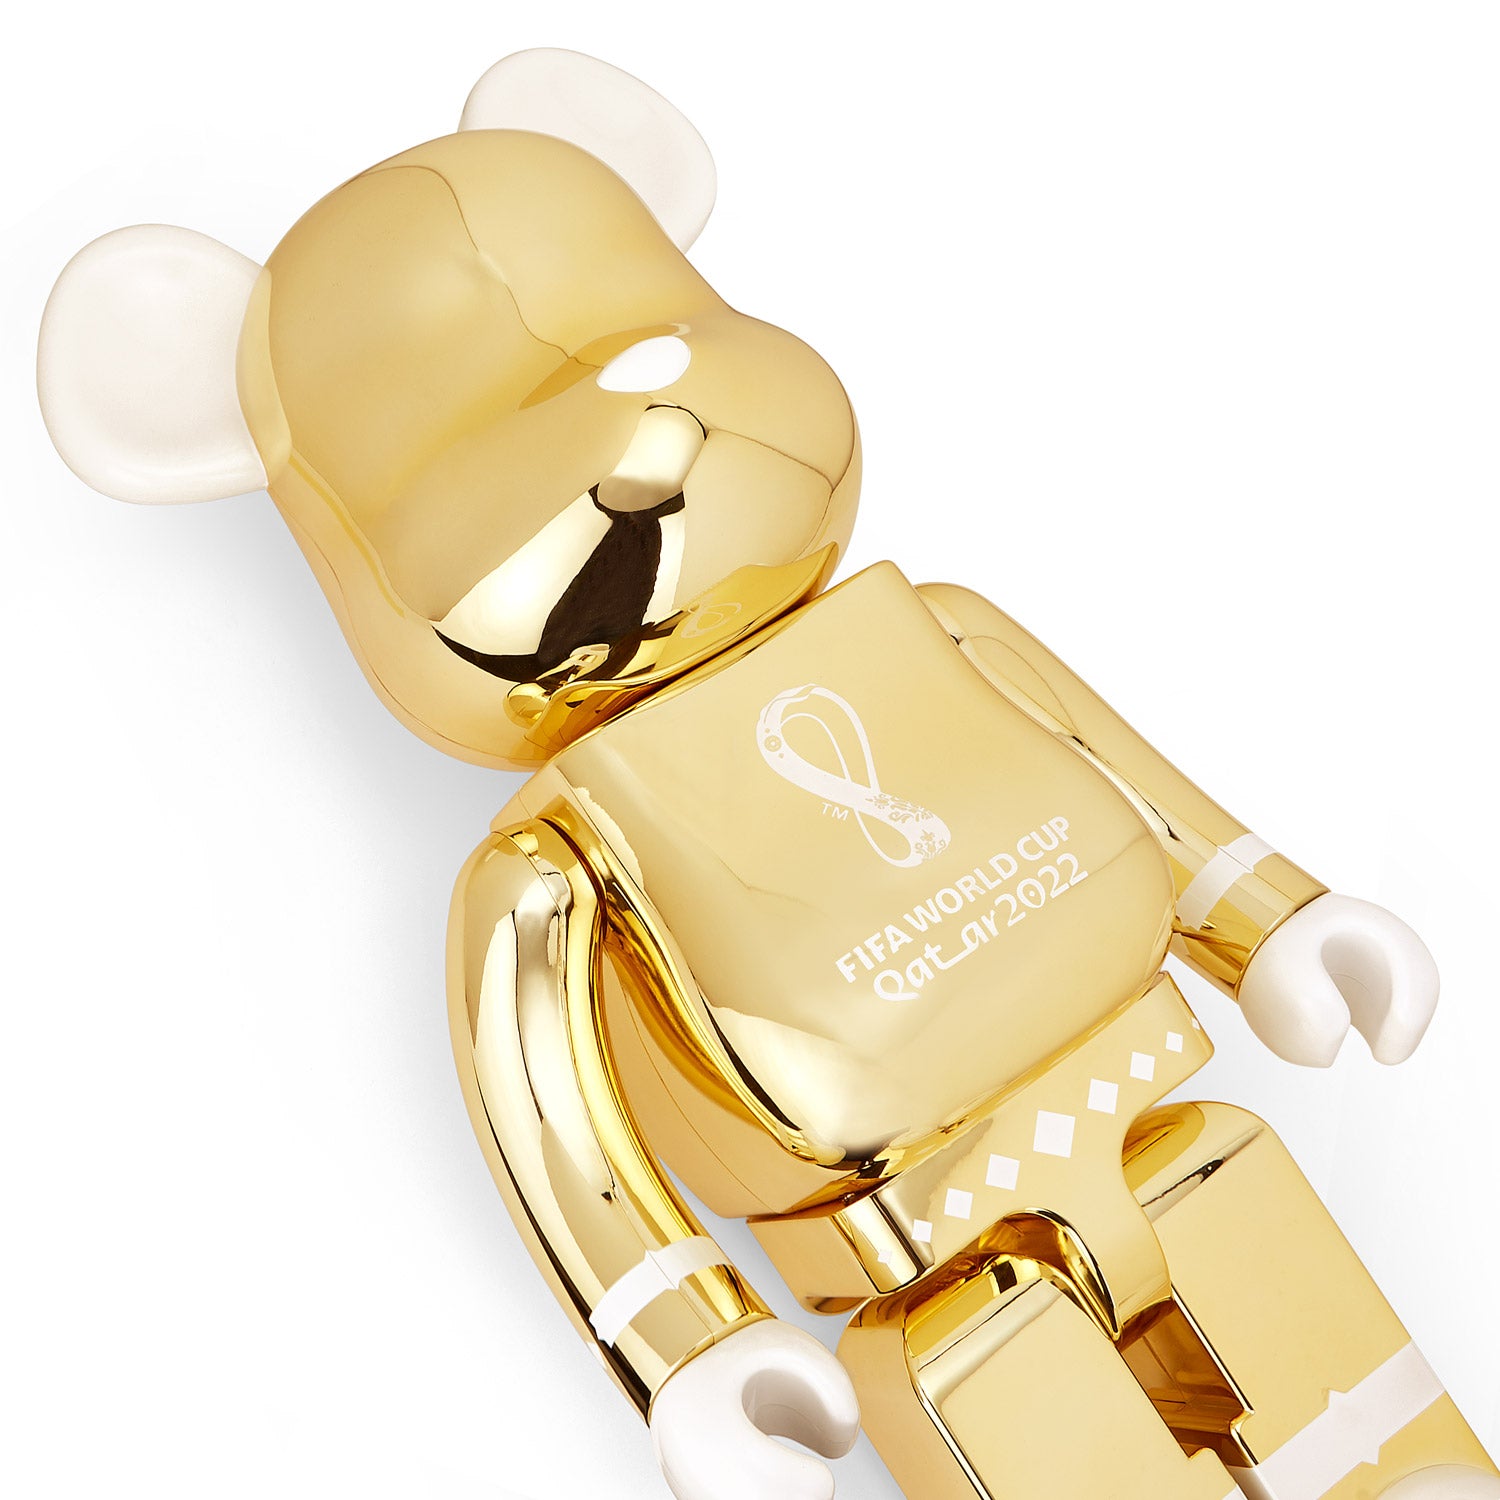 FIFA World Cup Qatar 2022 Gold Bearbrick with mini Bearbrick